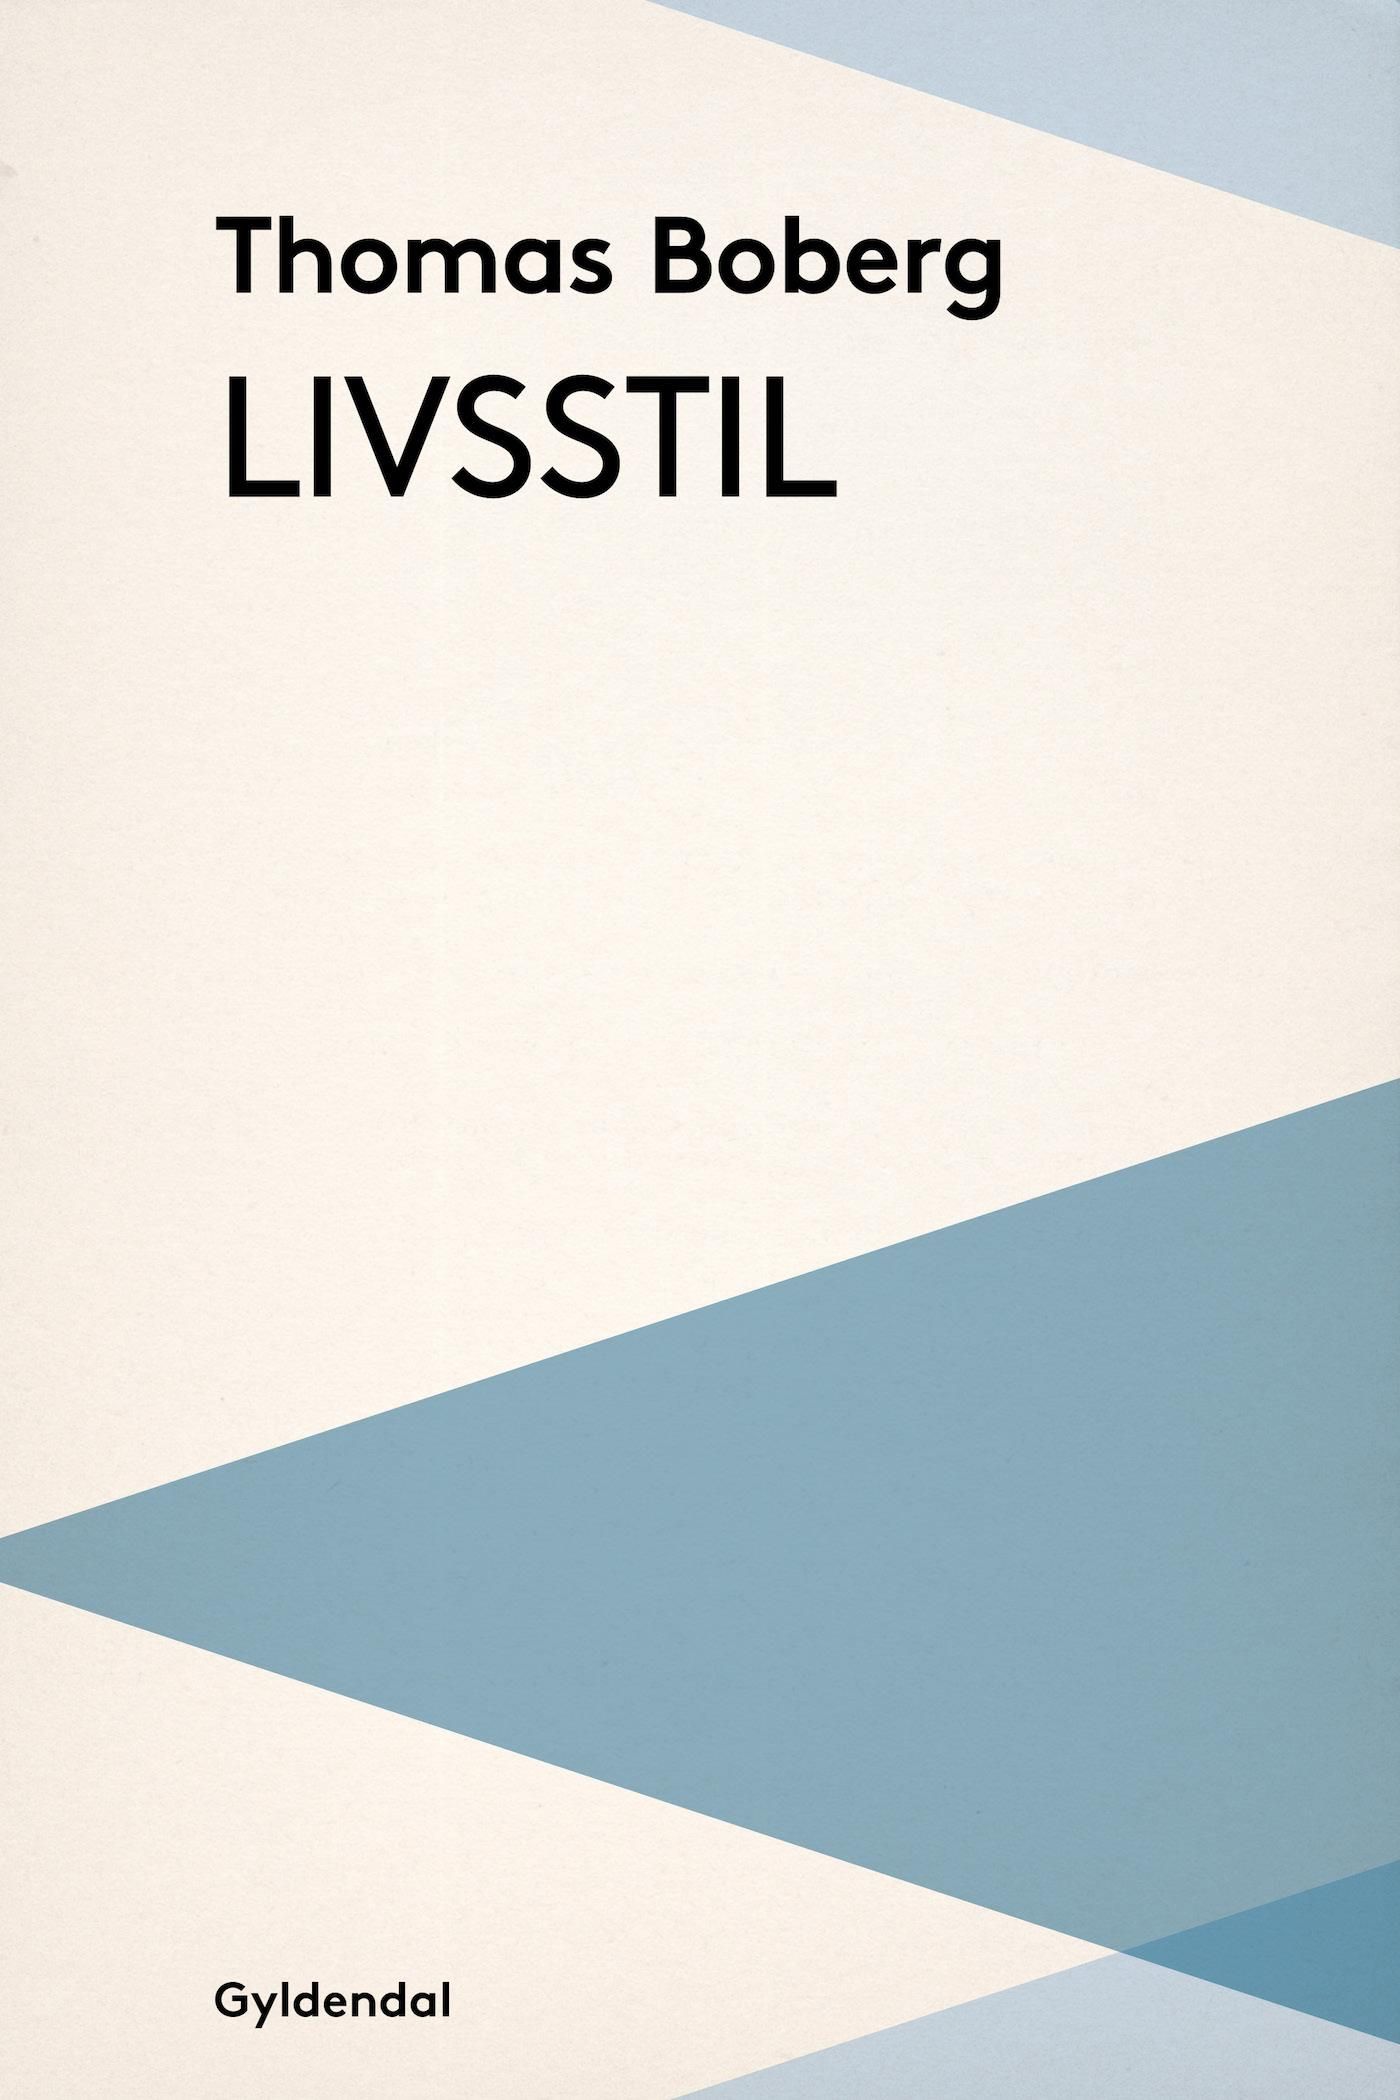 Livsstil, eBook by Thomas Boberg